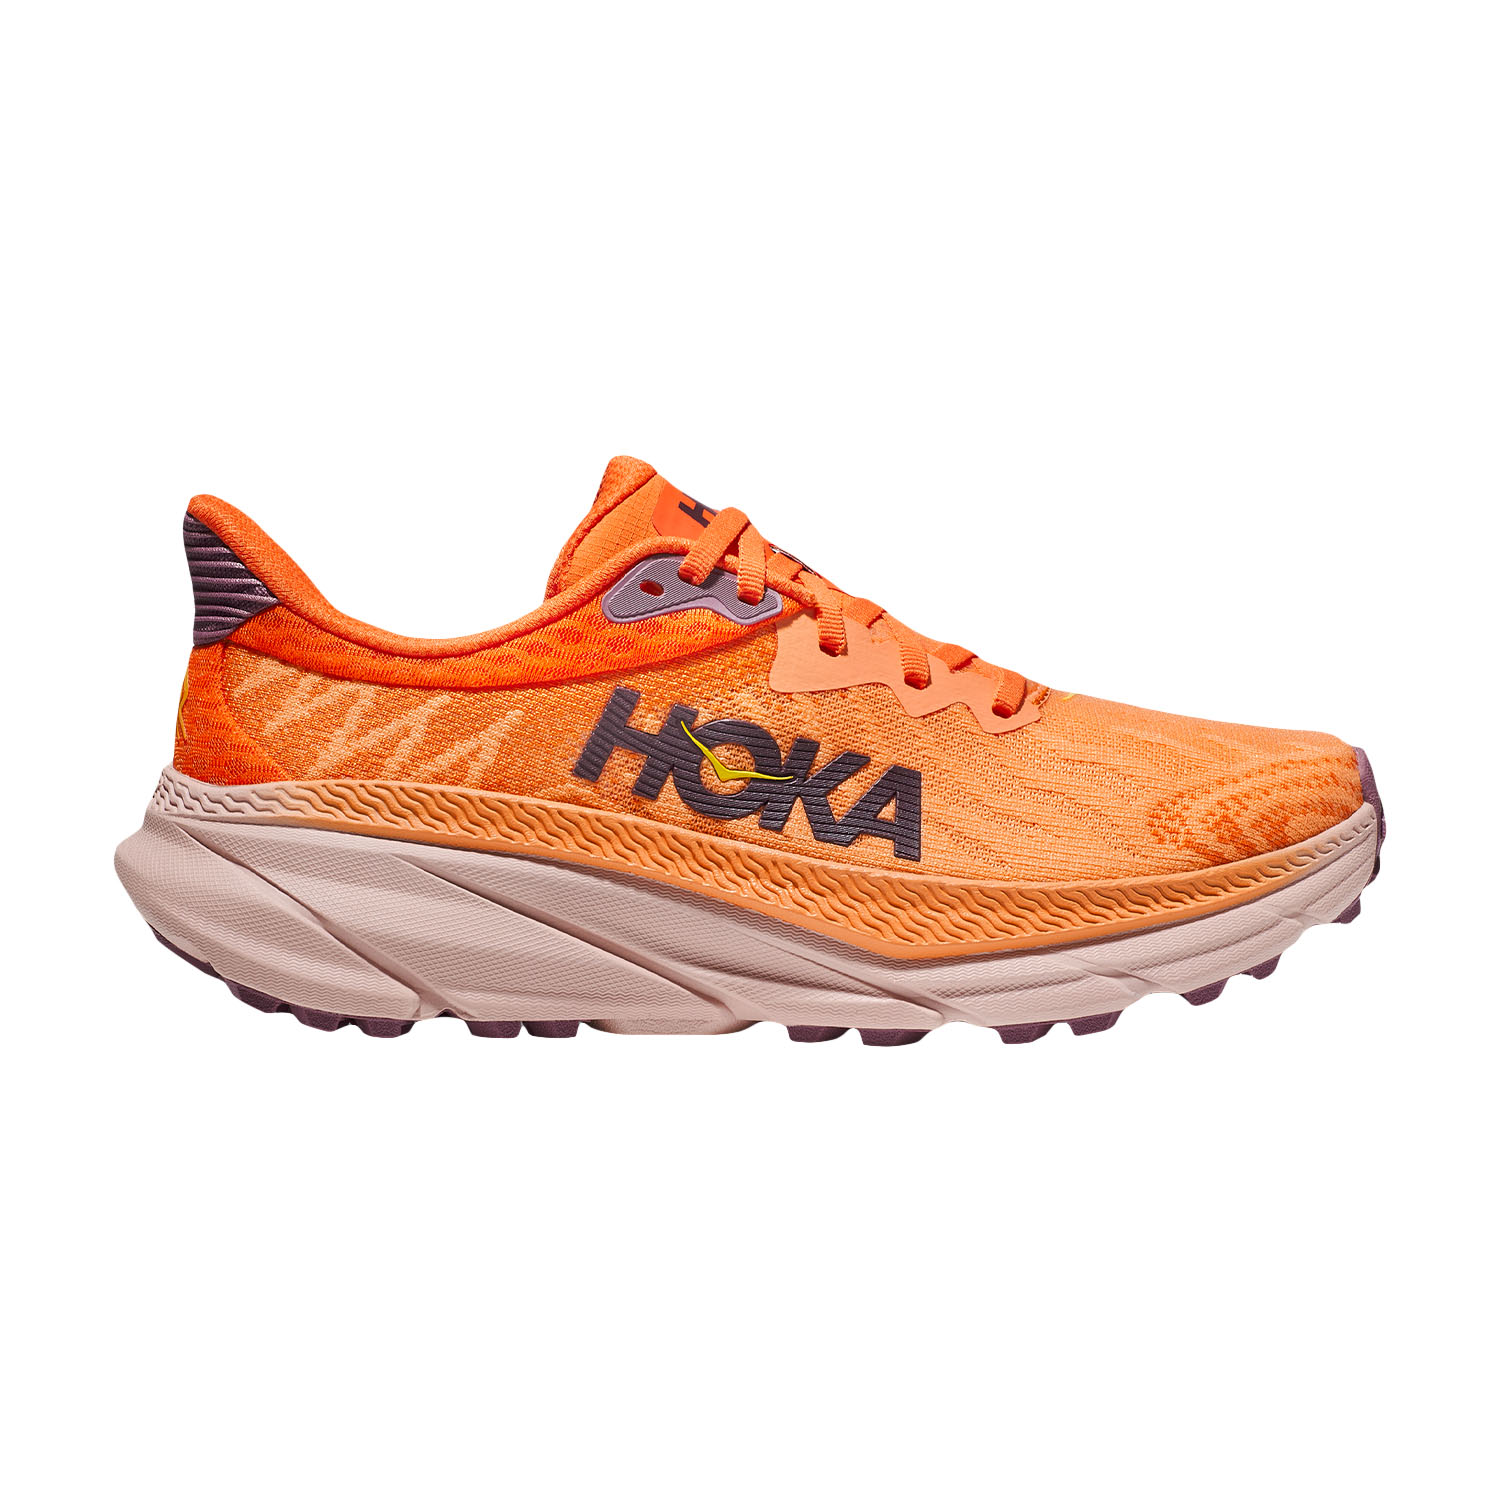 Hoka One One Challenger 7 Women's Trail Shoes - Ceramic/Orange